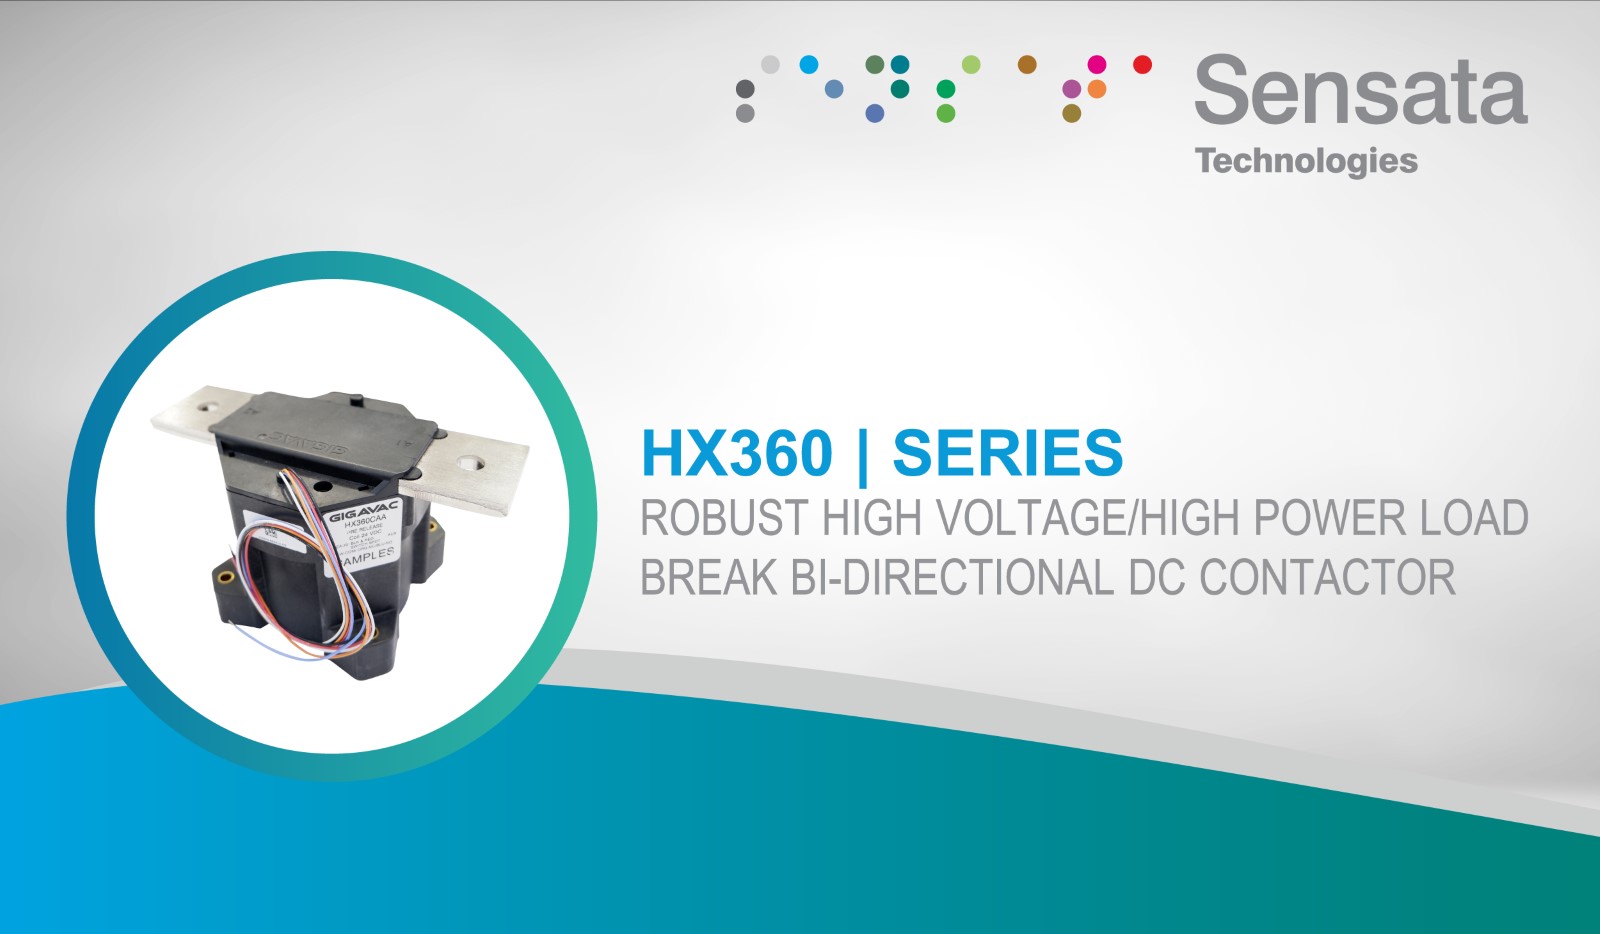 Sensata HX360 Series – High Voltage/High Power Load Break Bi-Directional DC Contactor